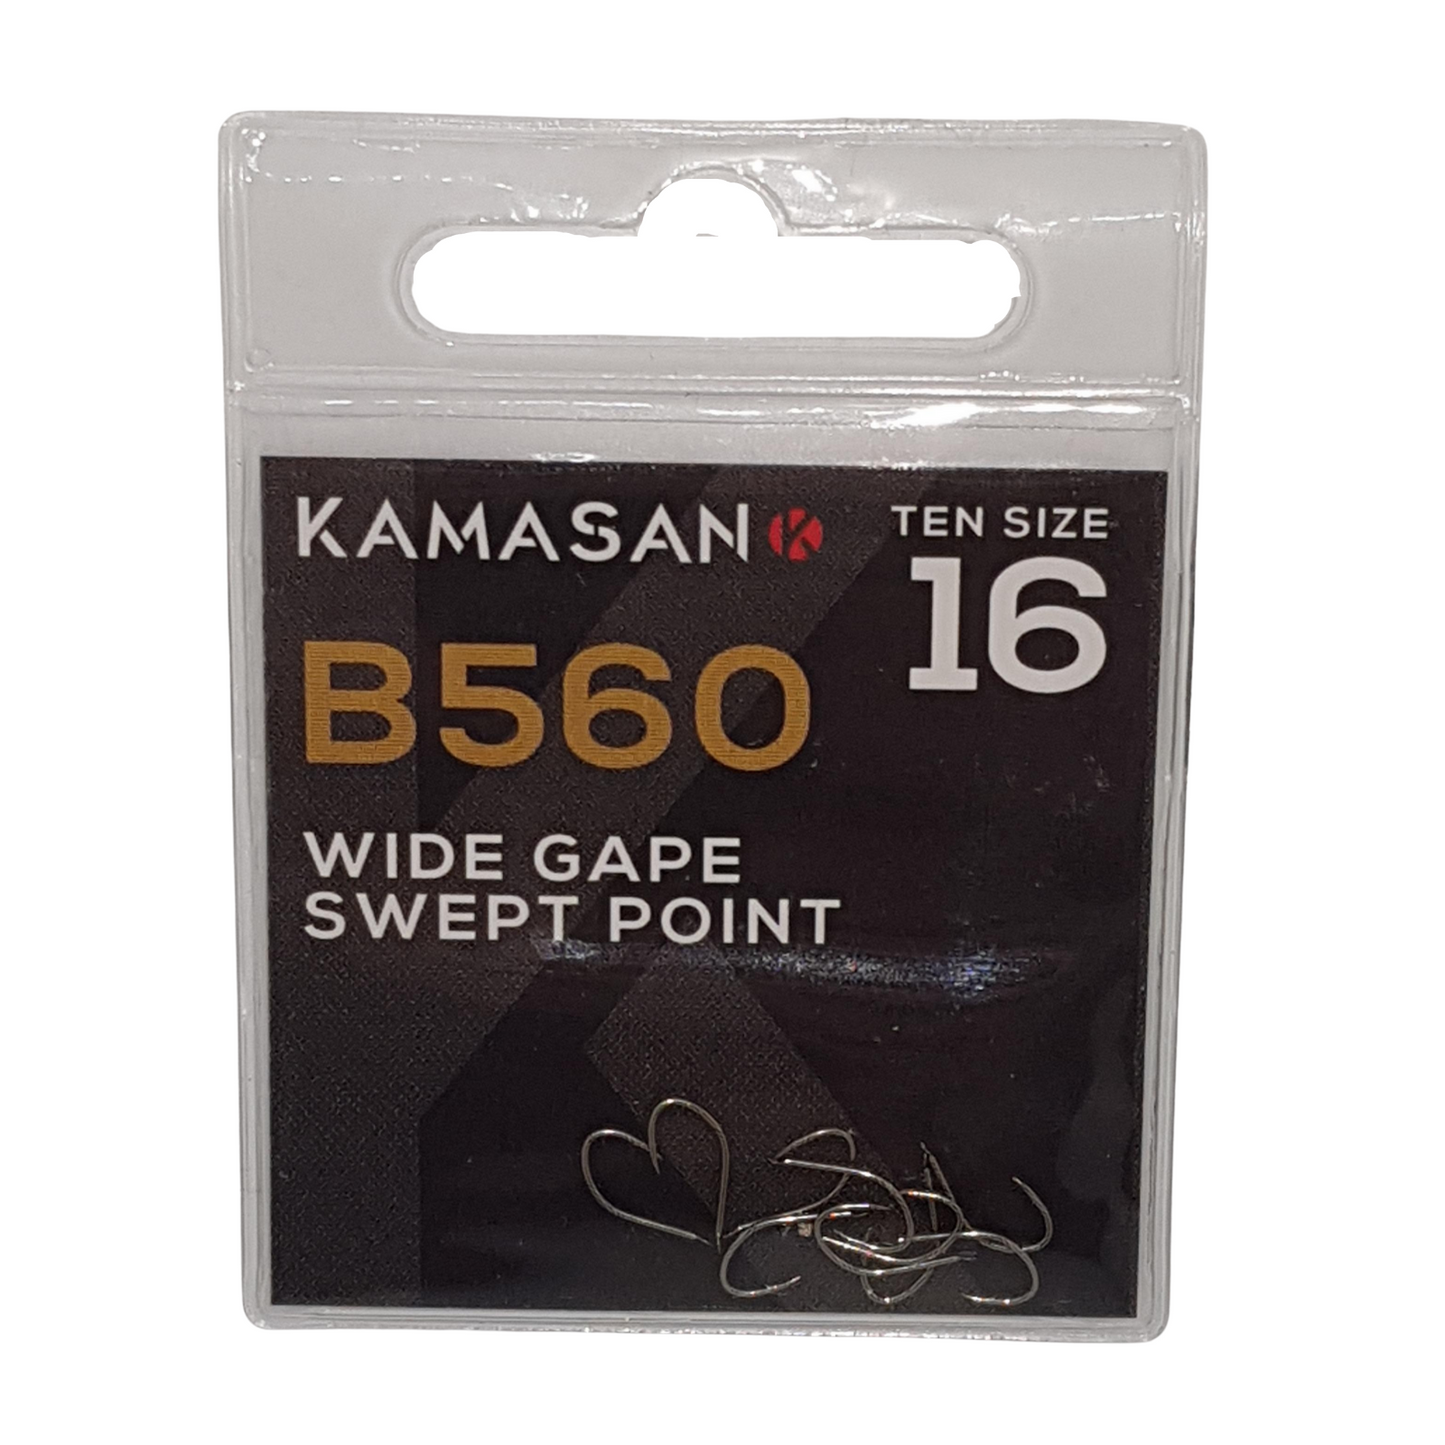 Kamasan B560 Hooks - Size 16 - Micro Barbed - Natural Venue Popular Pattern